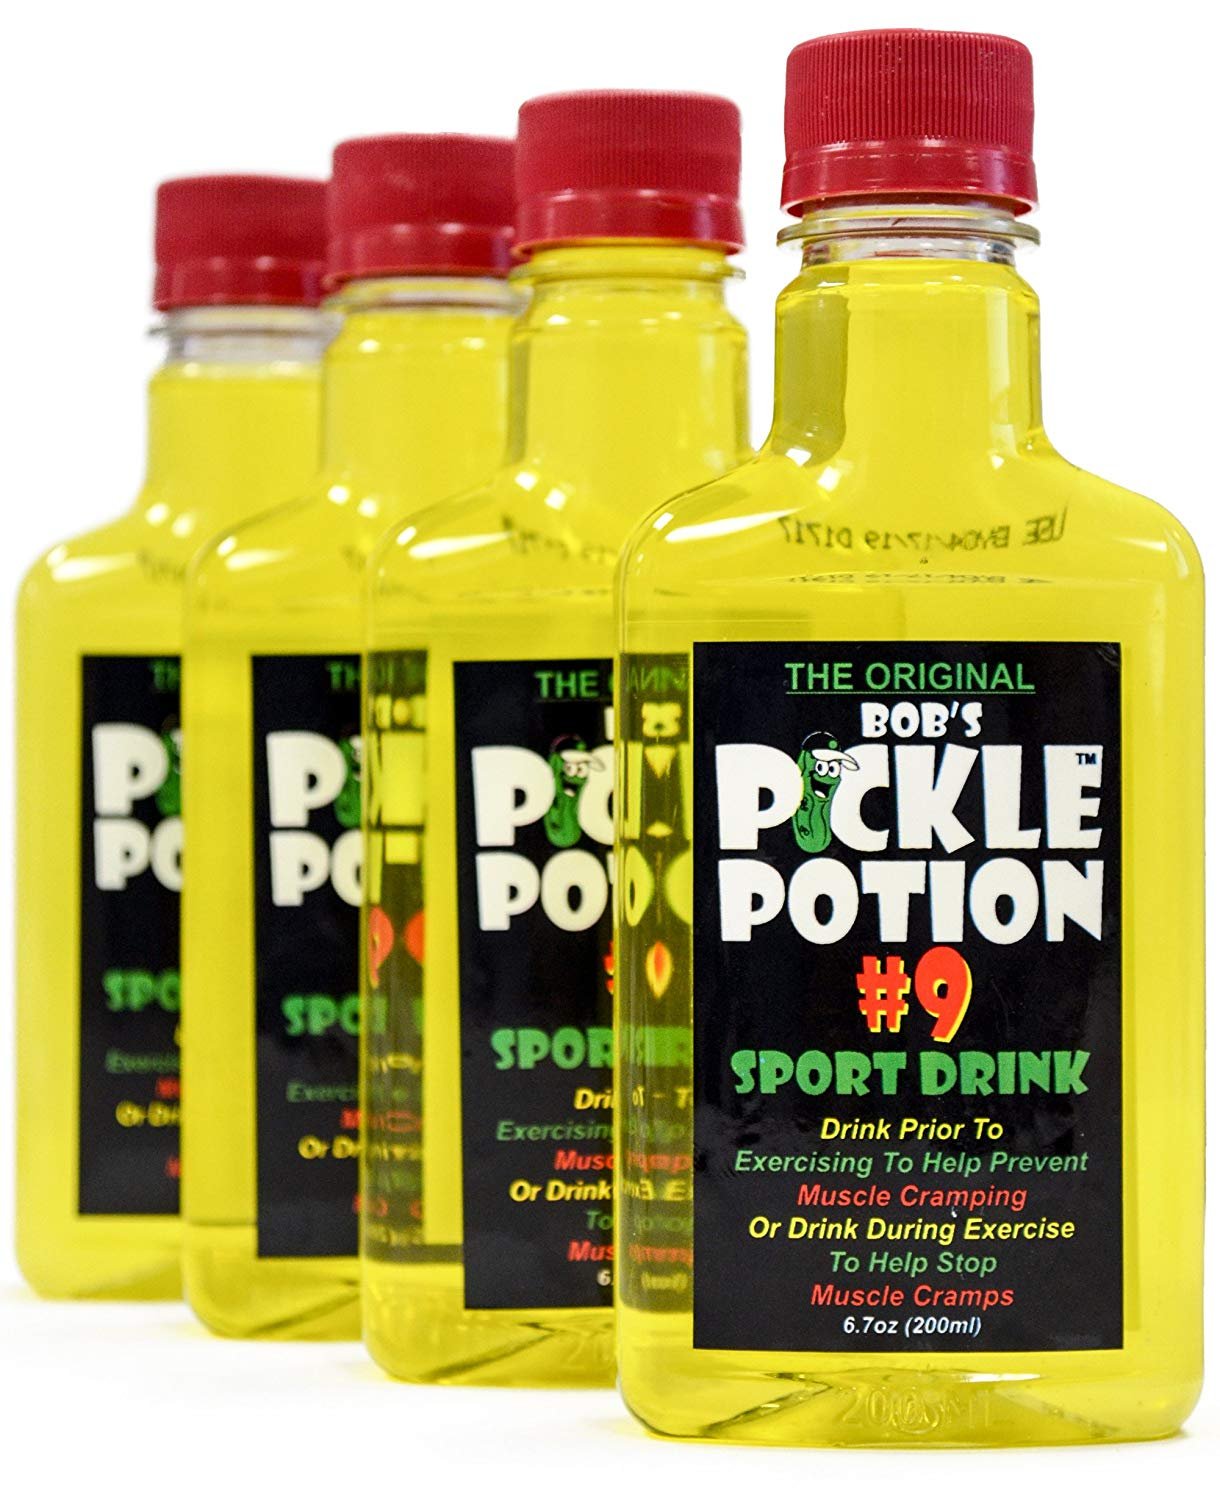 Bob's Pickle Potion #9 Sport Drink 200ml, 4 Pack